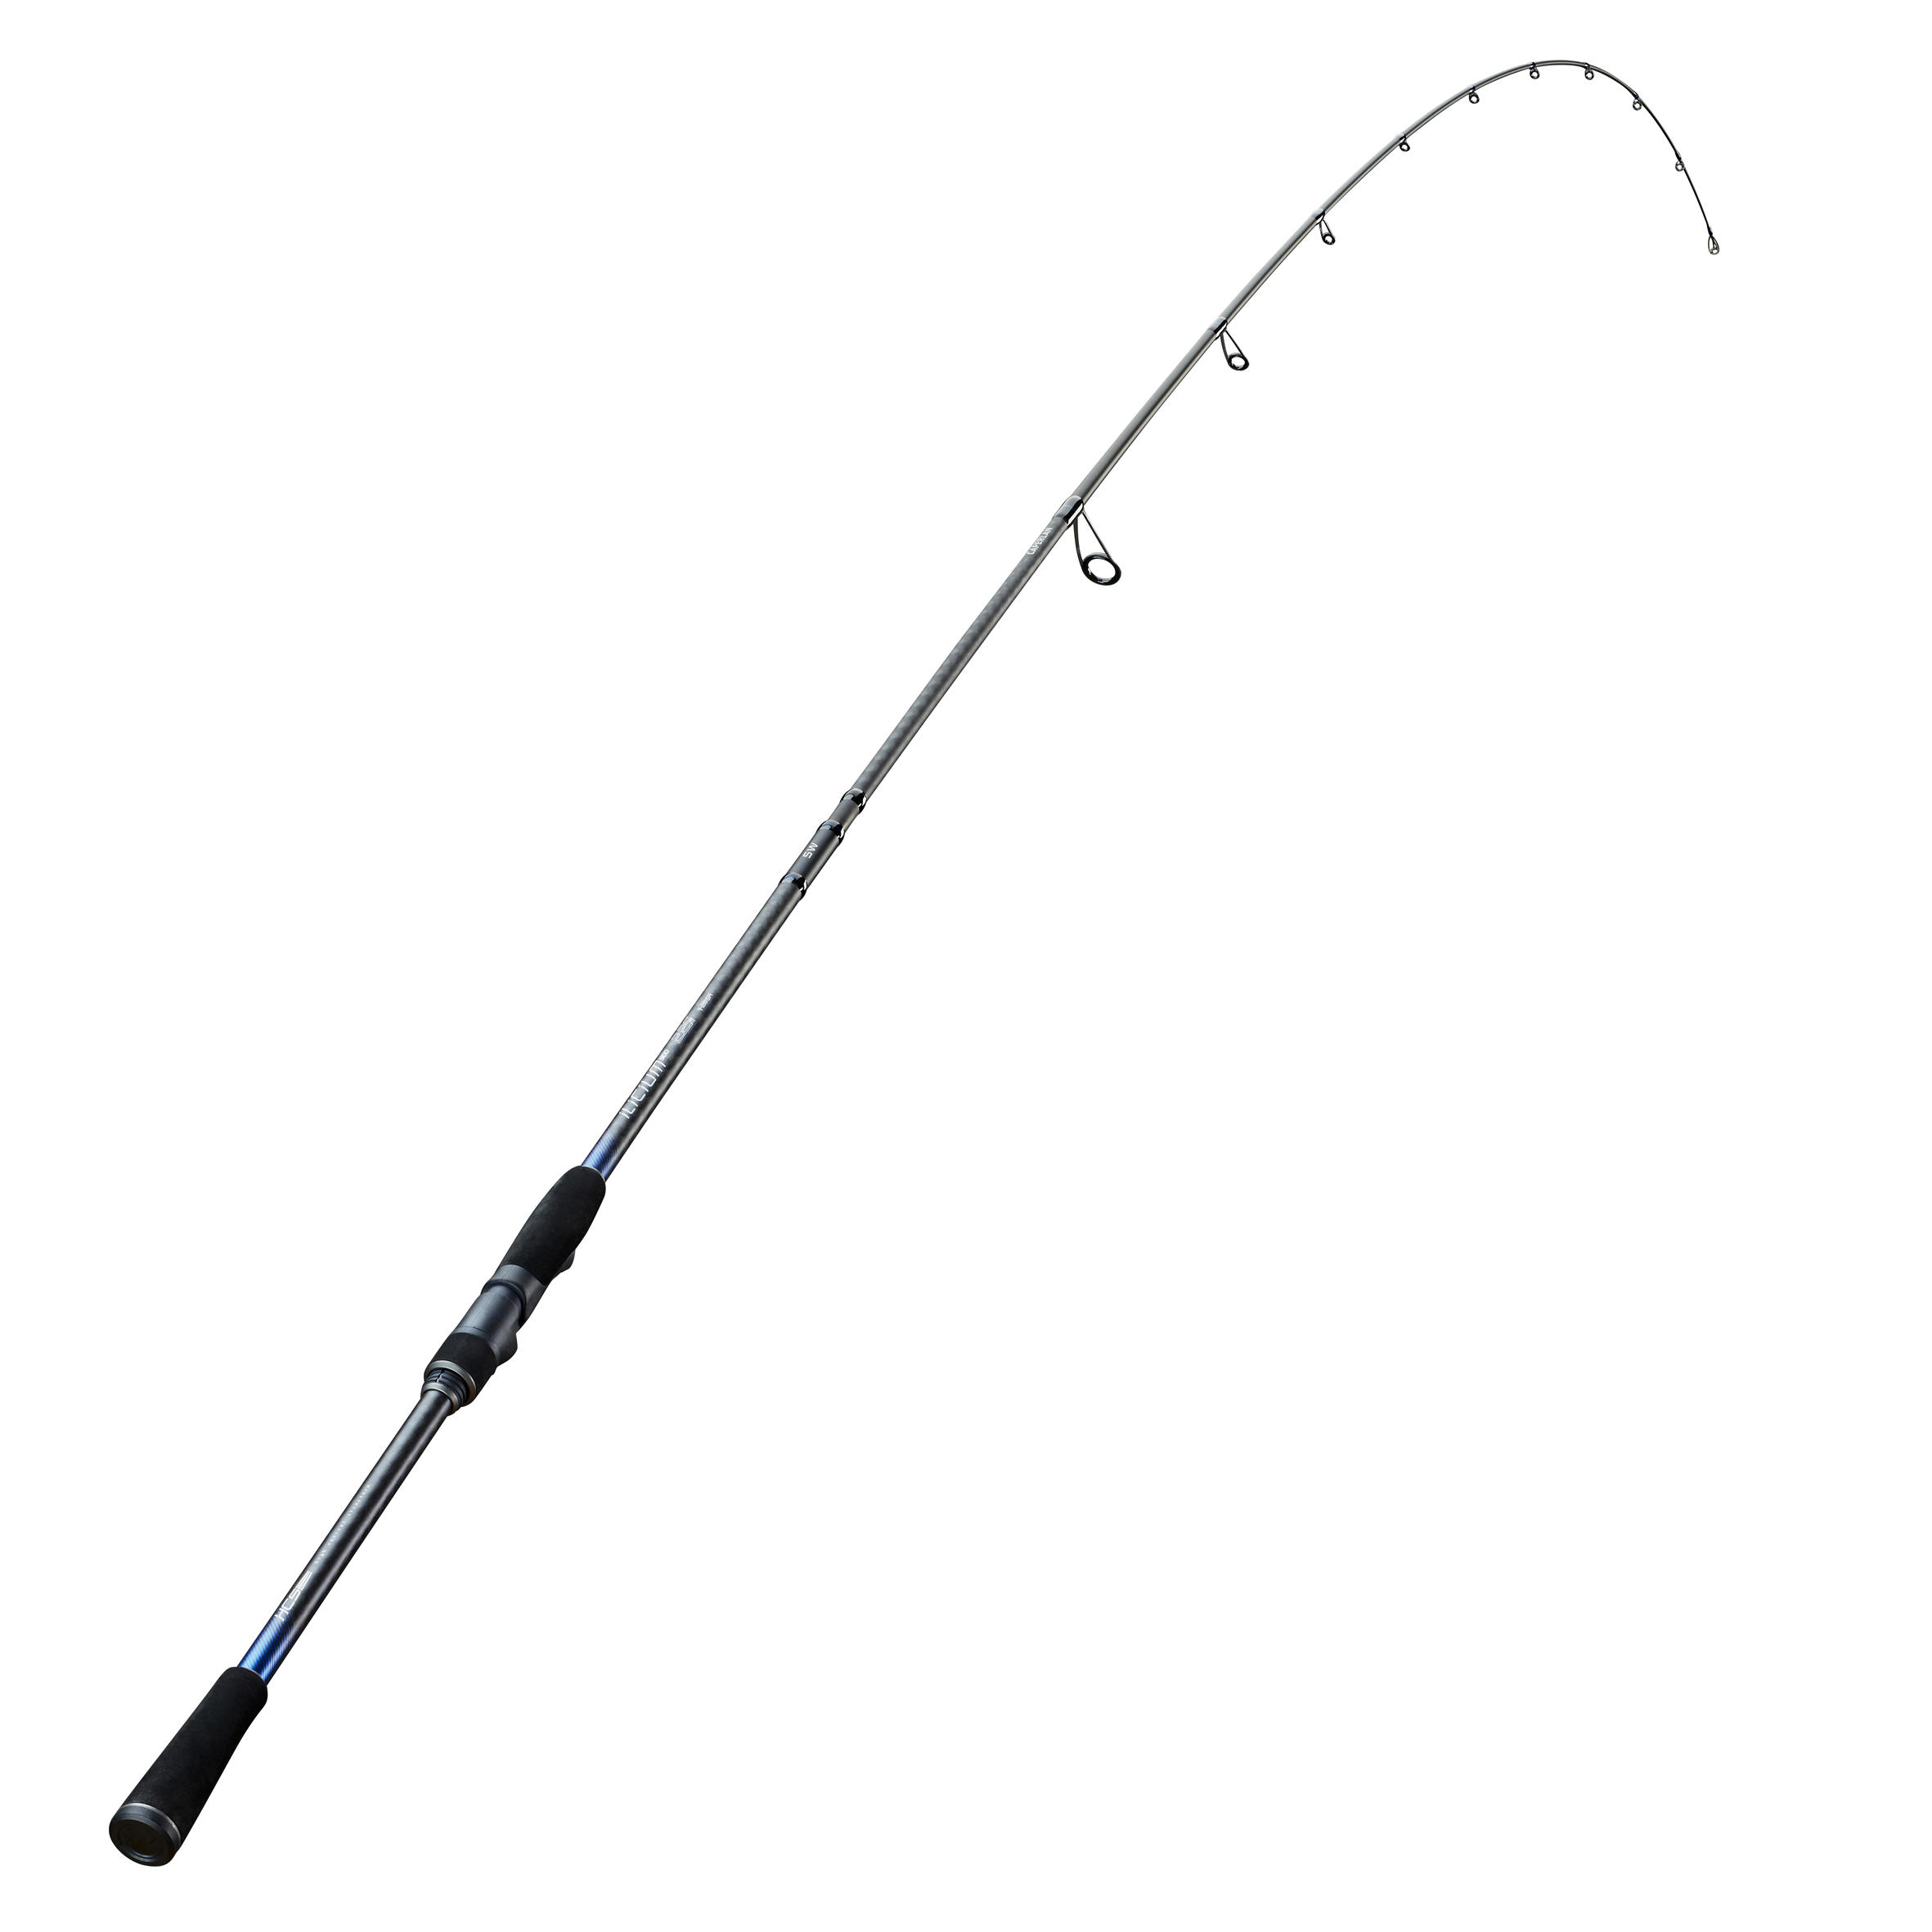 Sea lure fishing rod ILICIUM-900 225 7-28 g 6/7